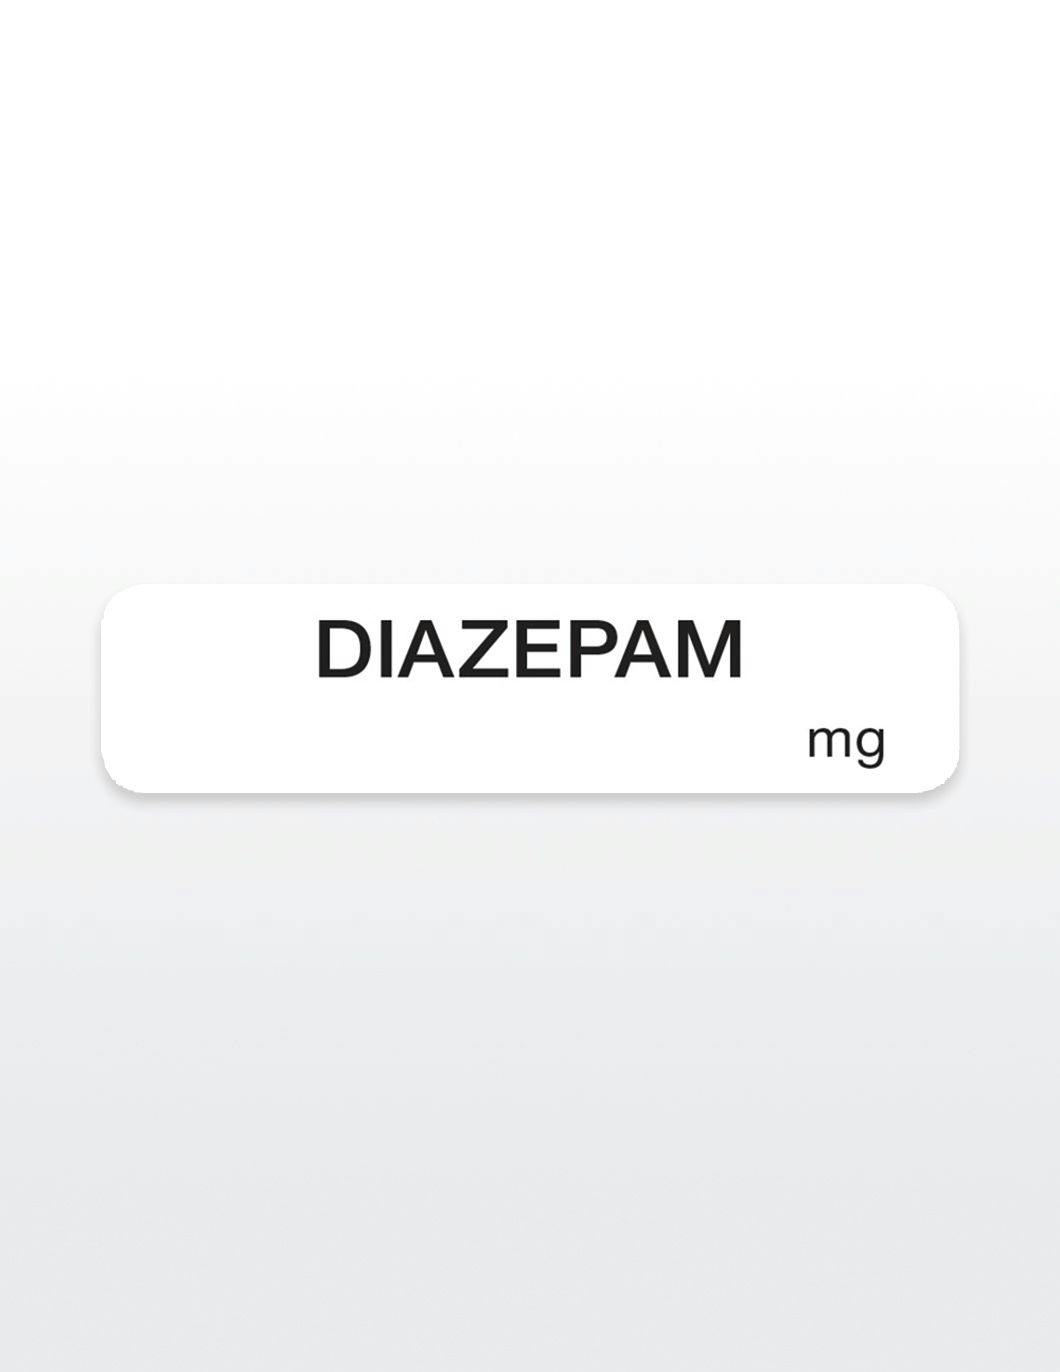 diazepam-drug-syringe-stickers